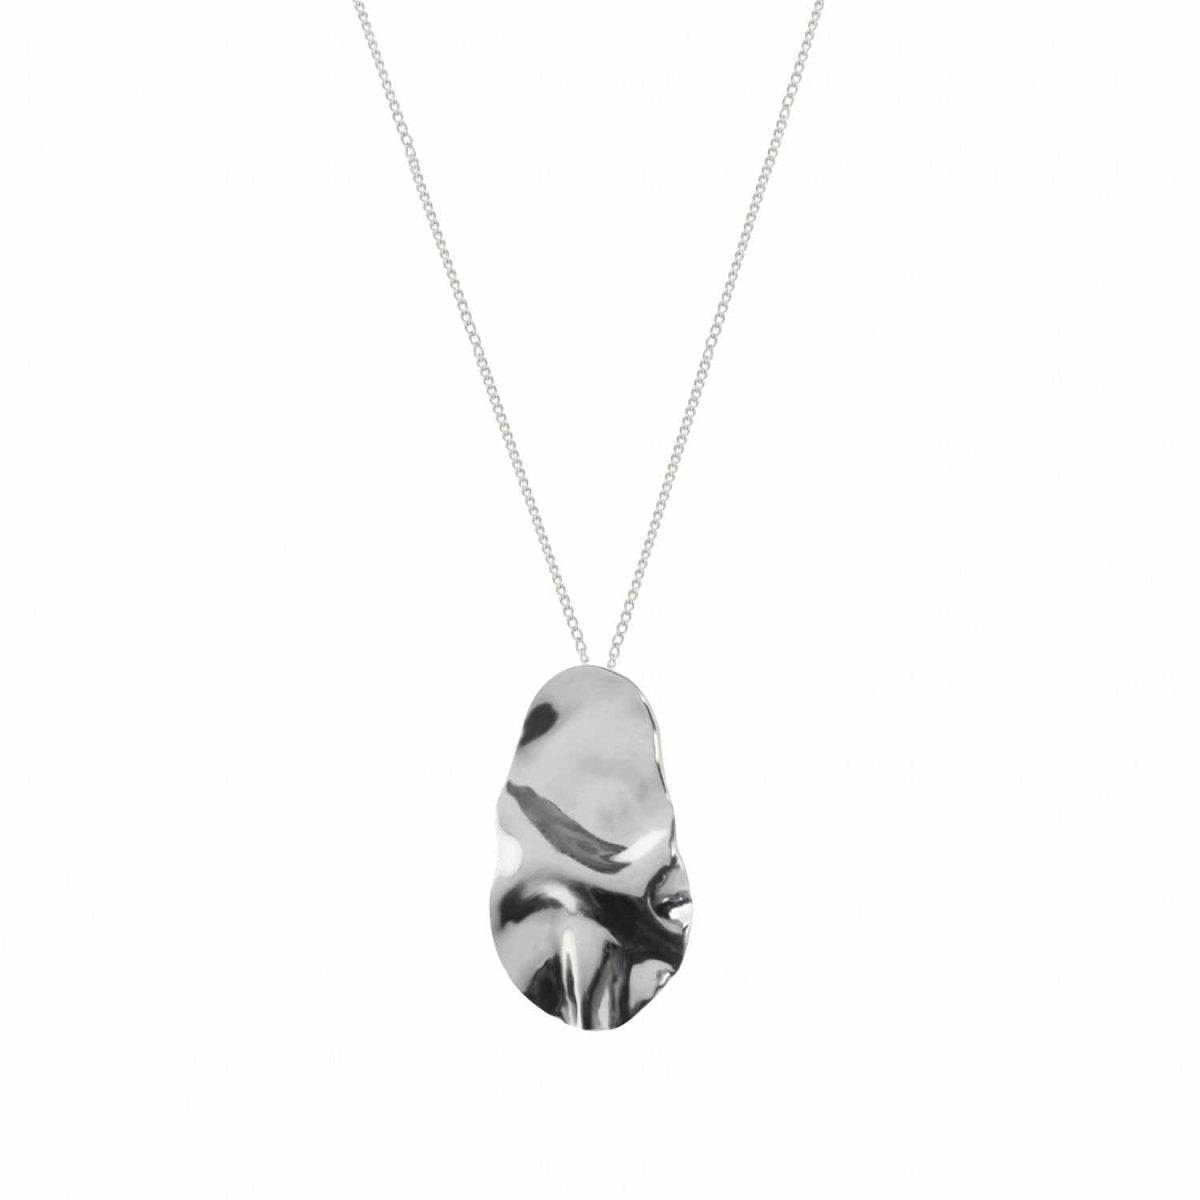 Necklace - Original silver pendants with circular elongated motif